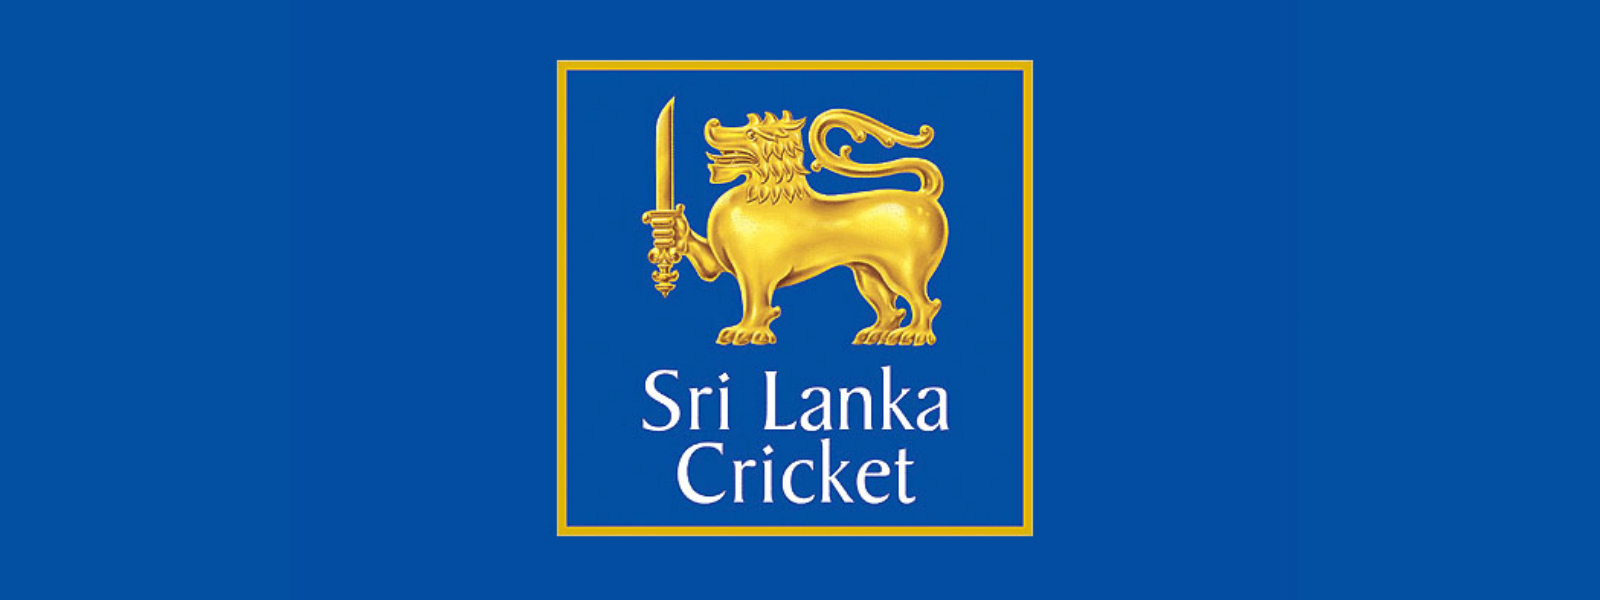 President approves new SL Cricket Captain